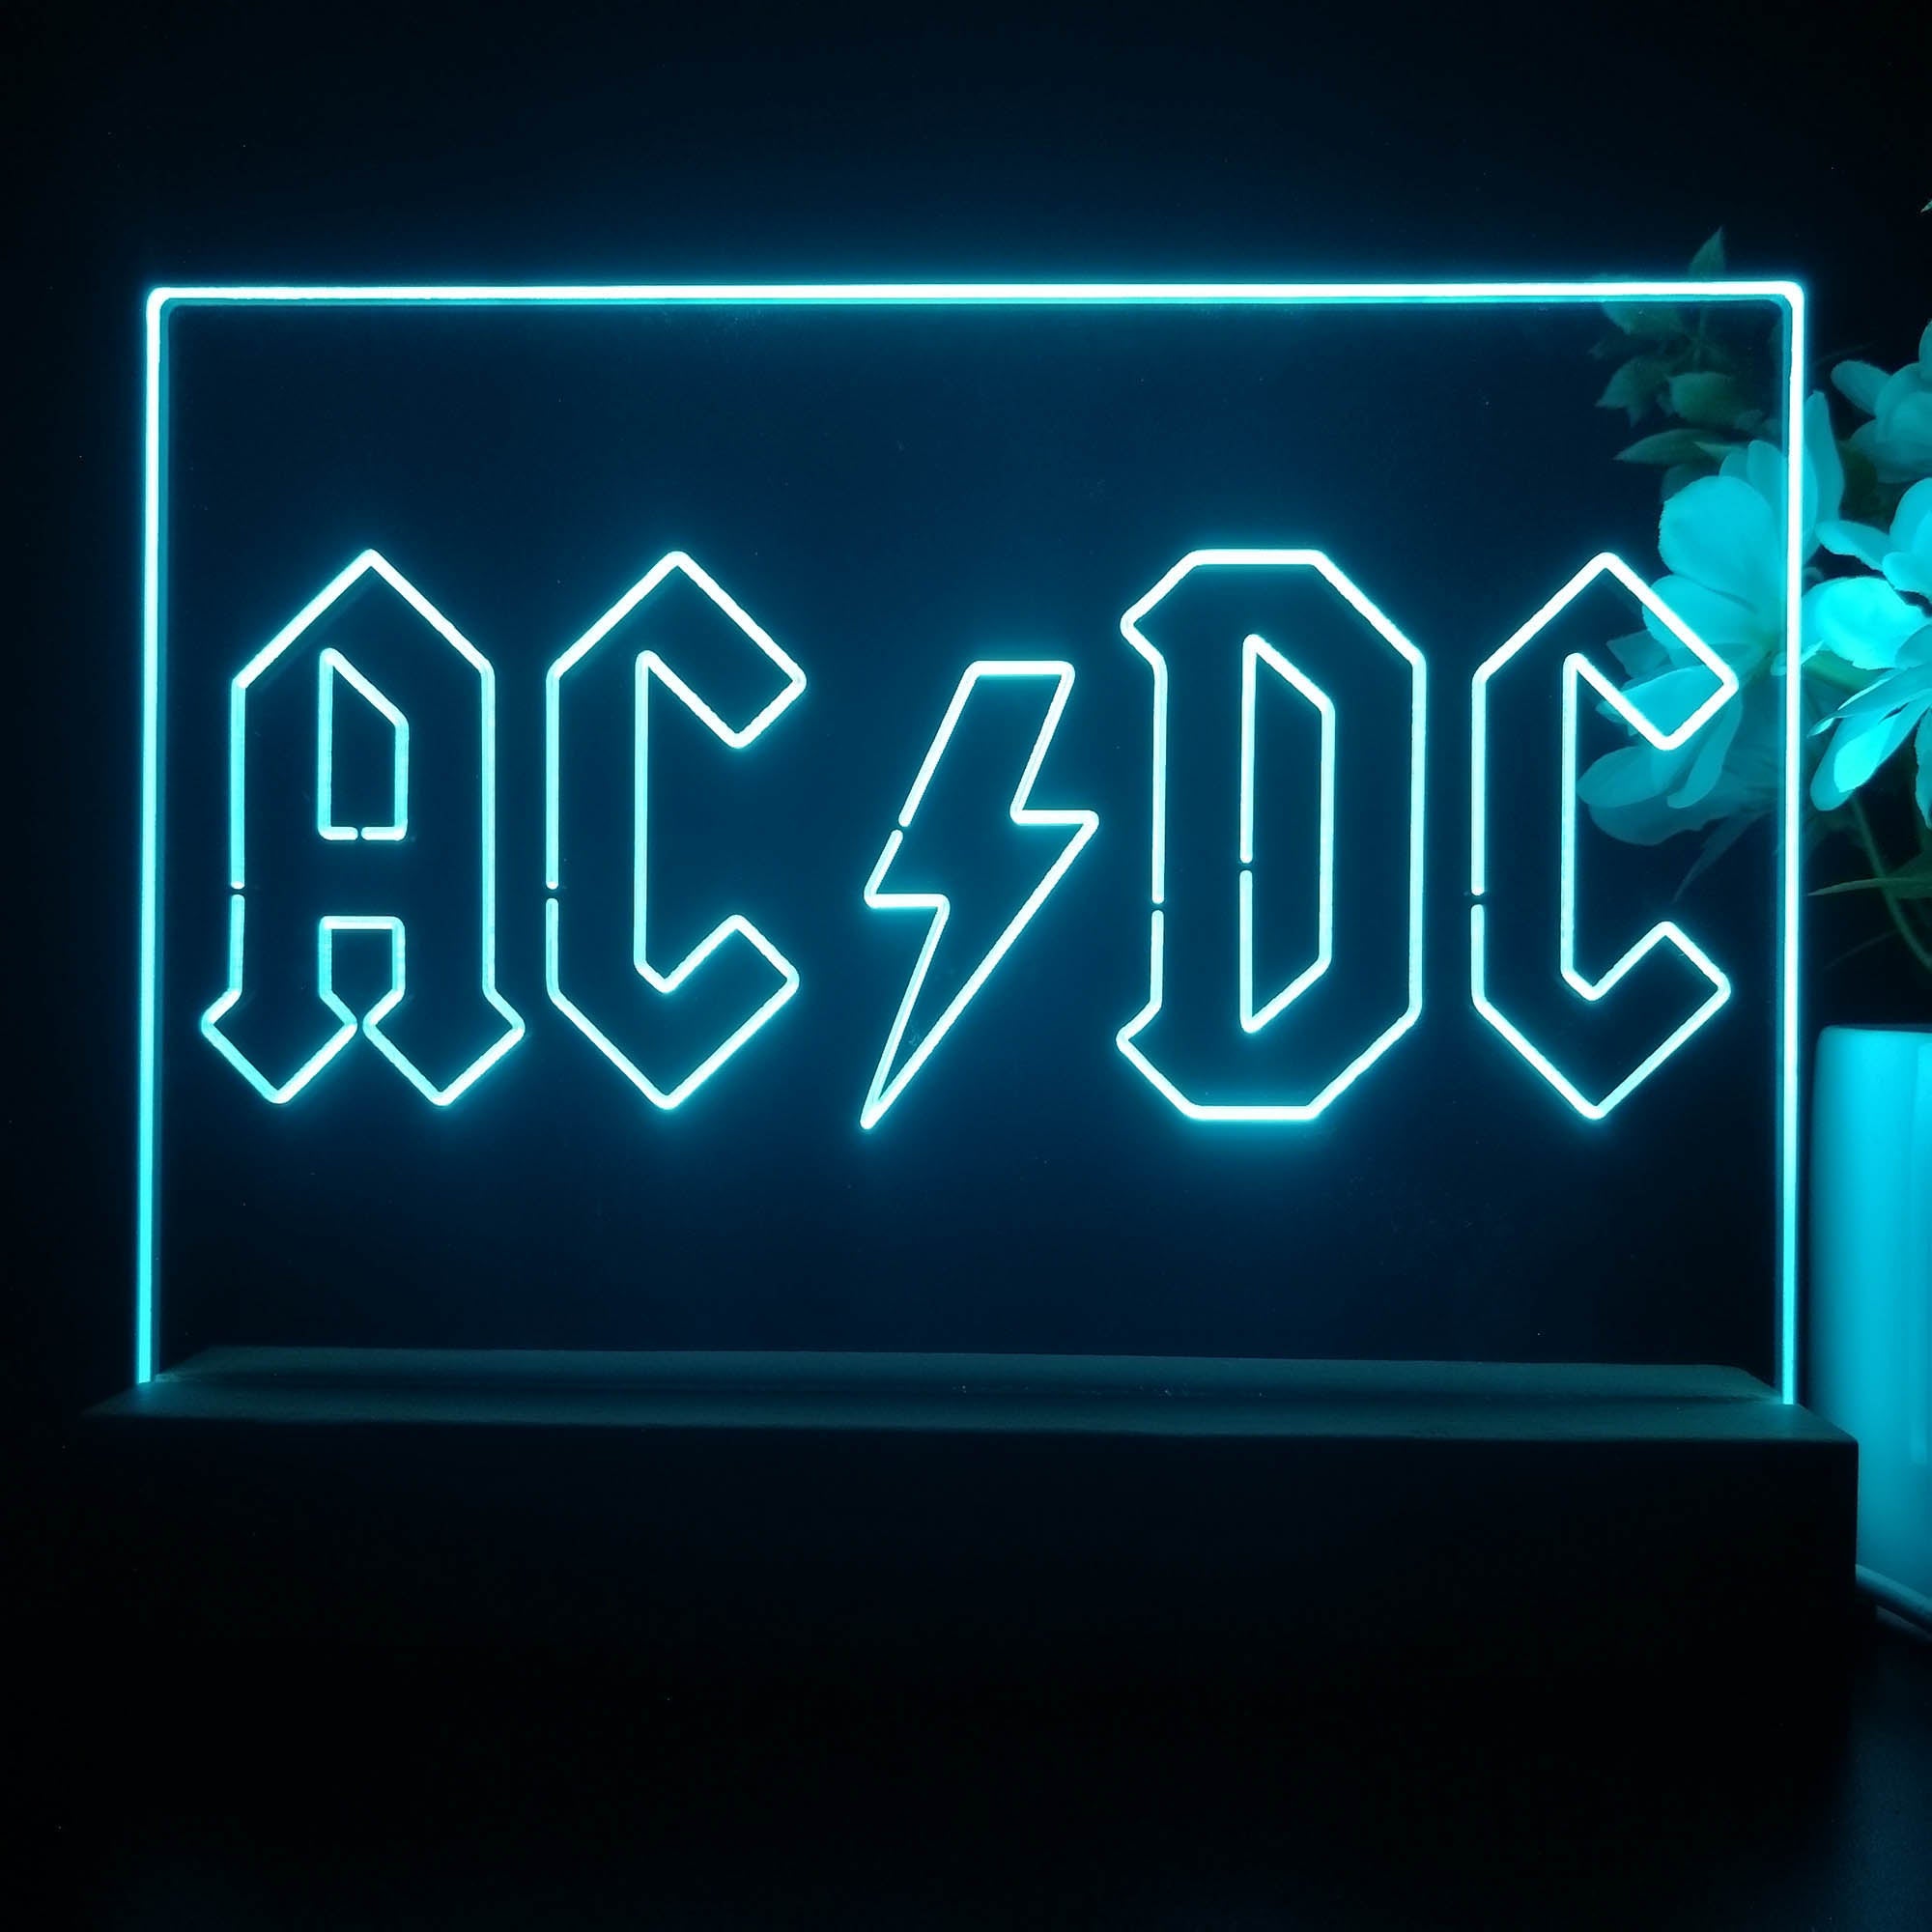 ACDC Band Music 3D Illusion Night Light Desk Lamp